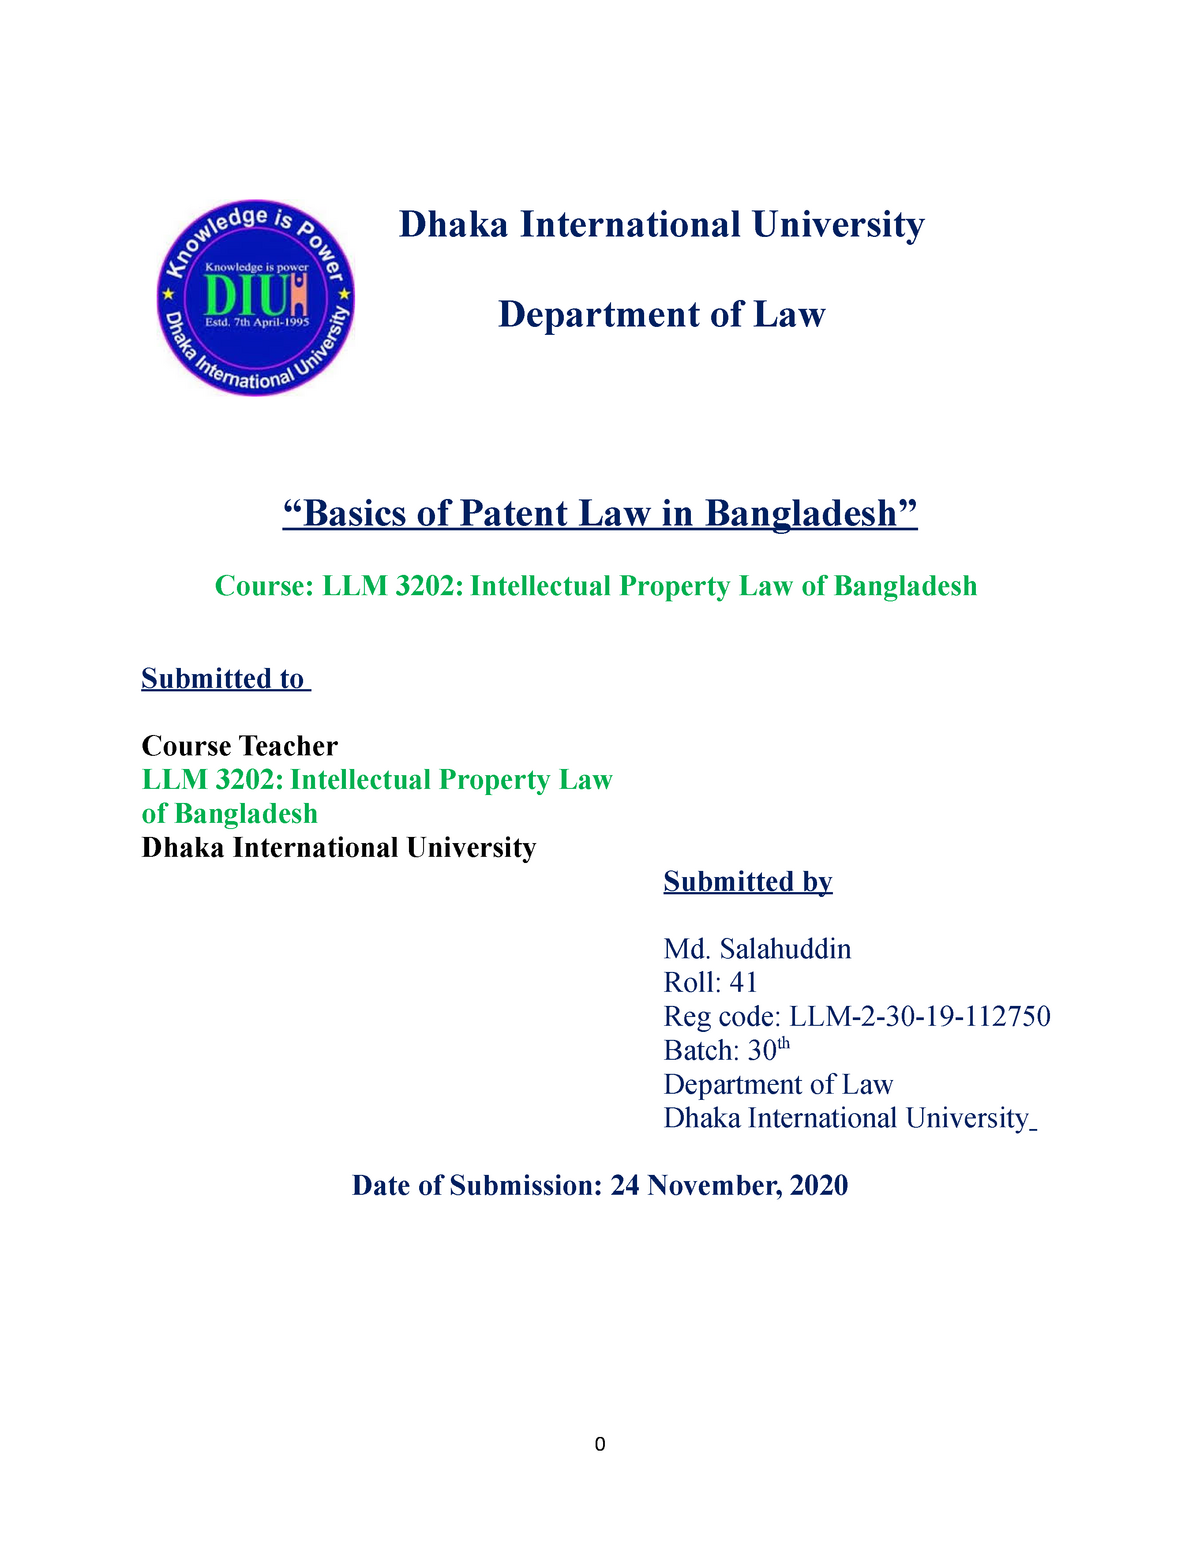 assignment-on-patent-law-in-bangladesh-dhaka-international-university